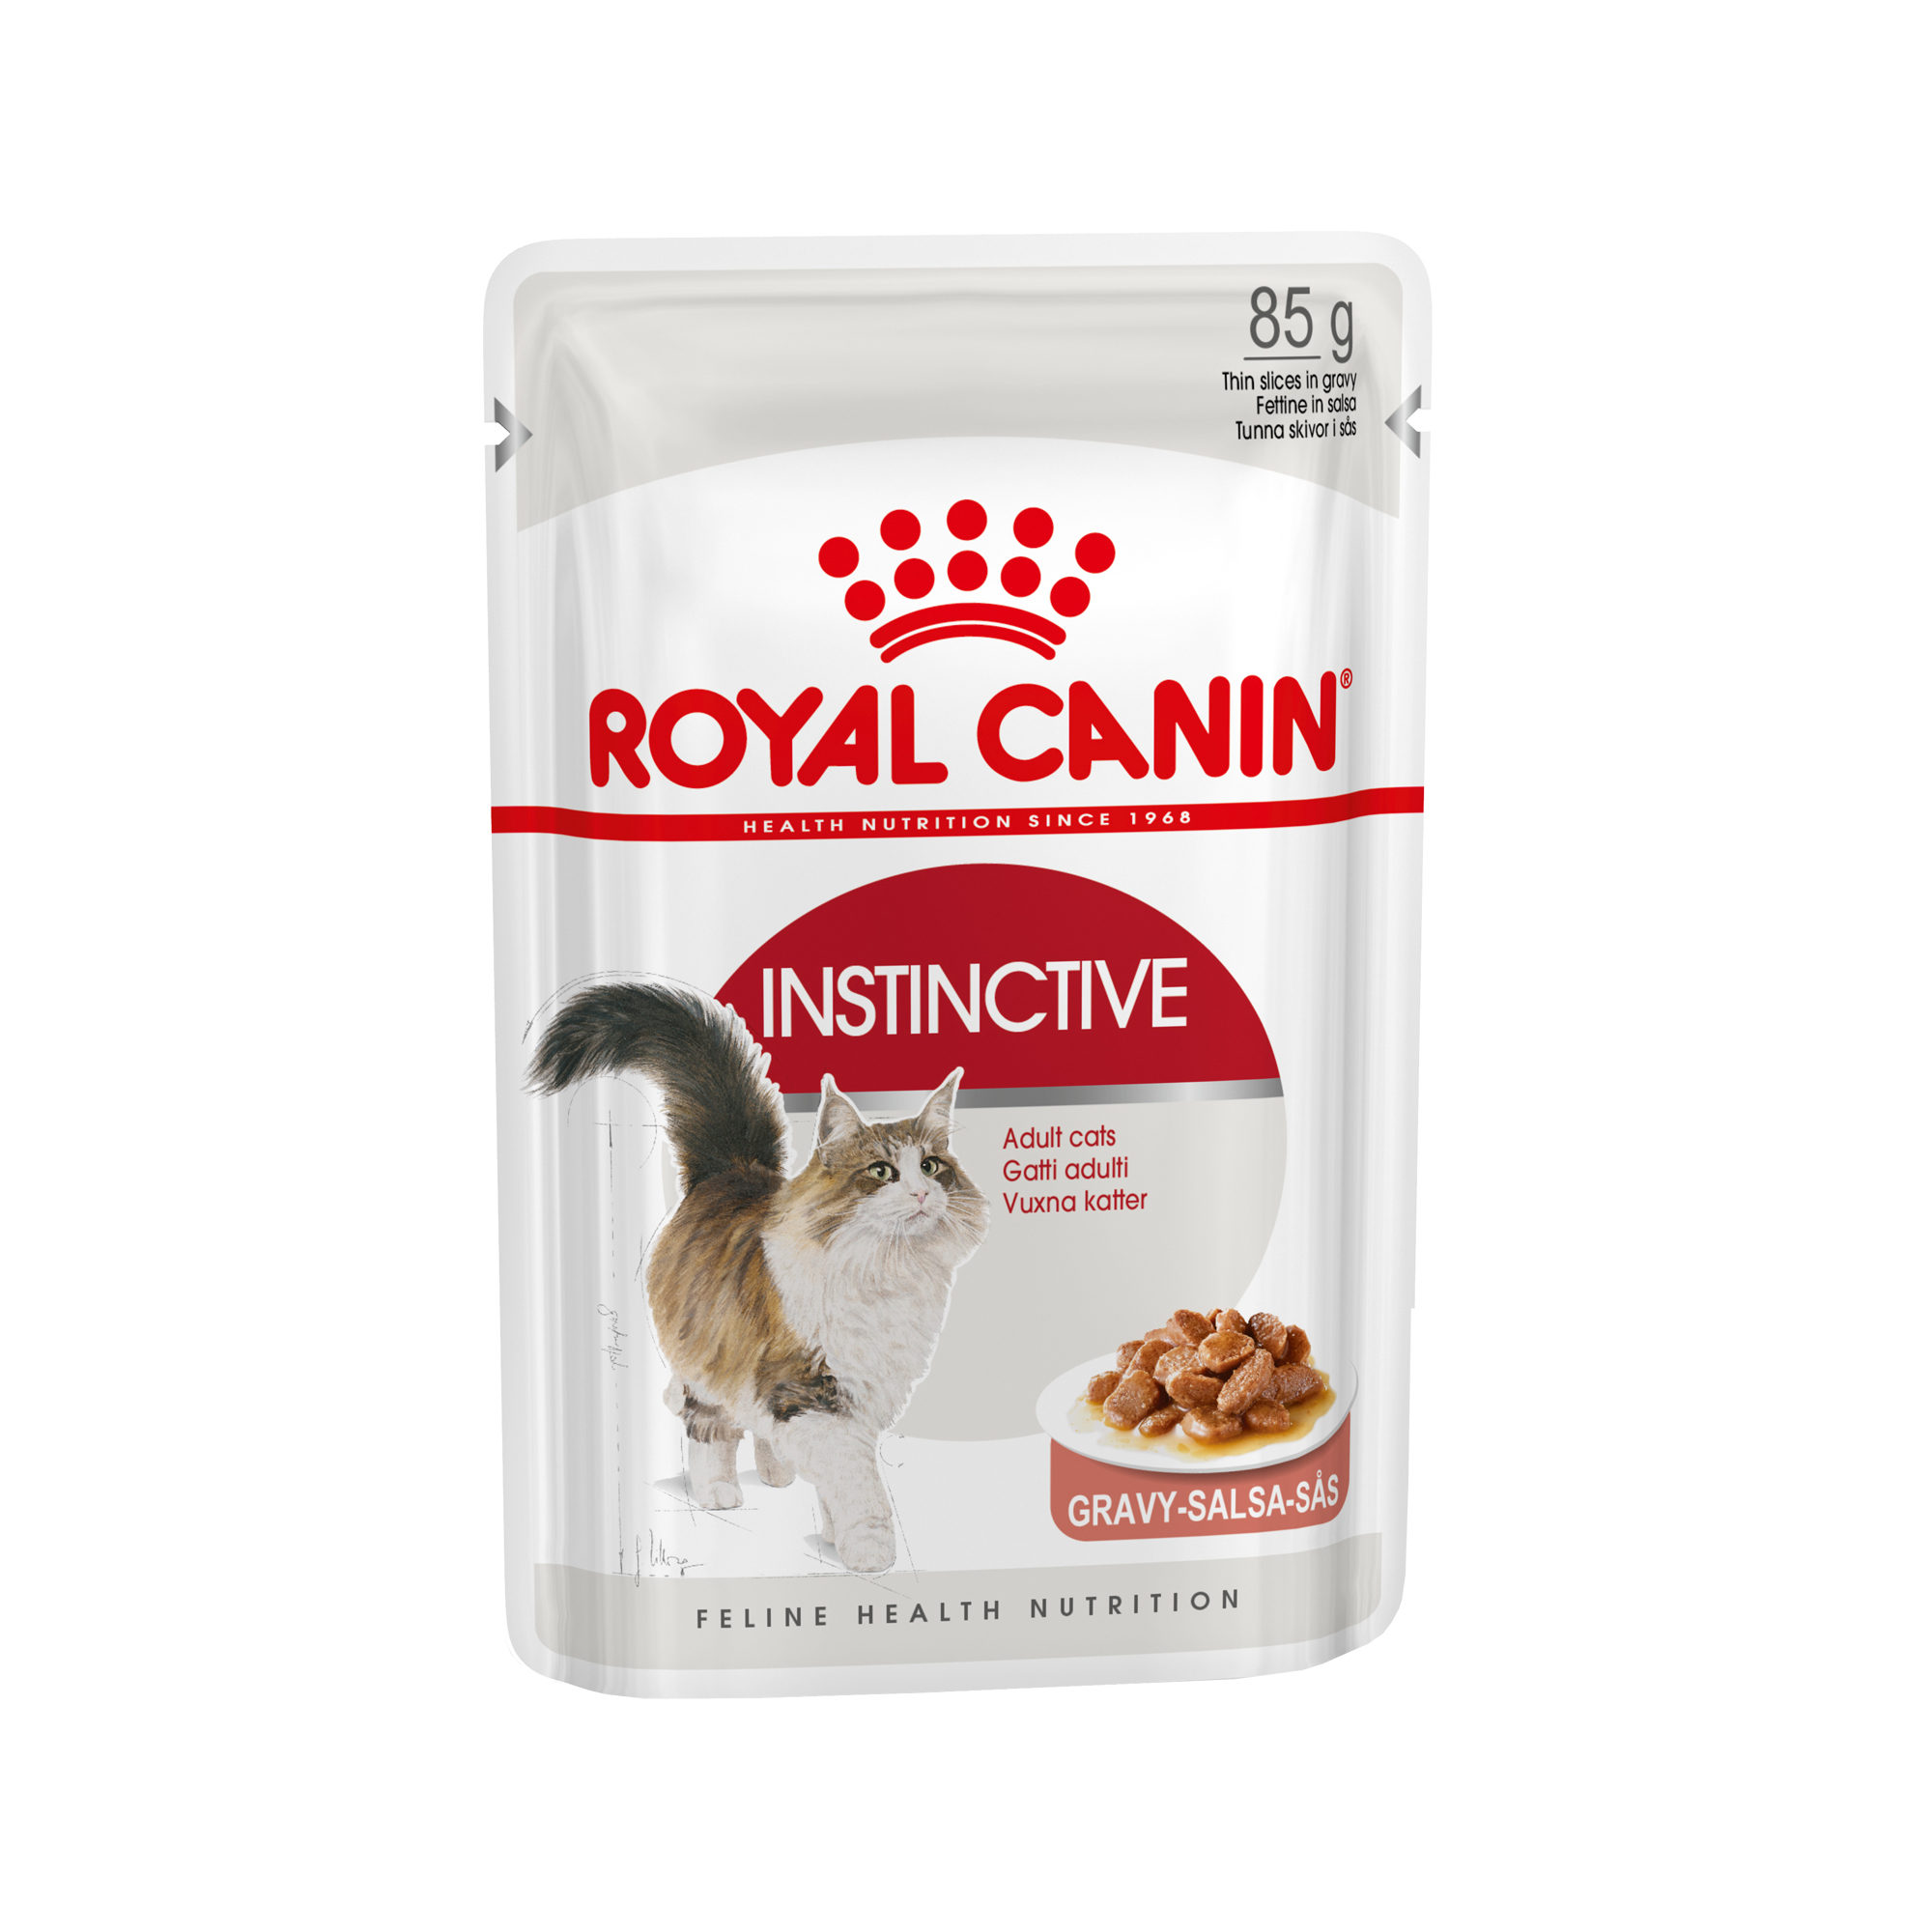 Royal Canin Instinctive Sauce Multipack, Katzenfutter - 12 x 85g Portionsbeutel